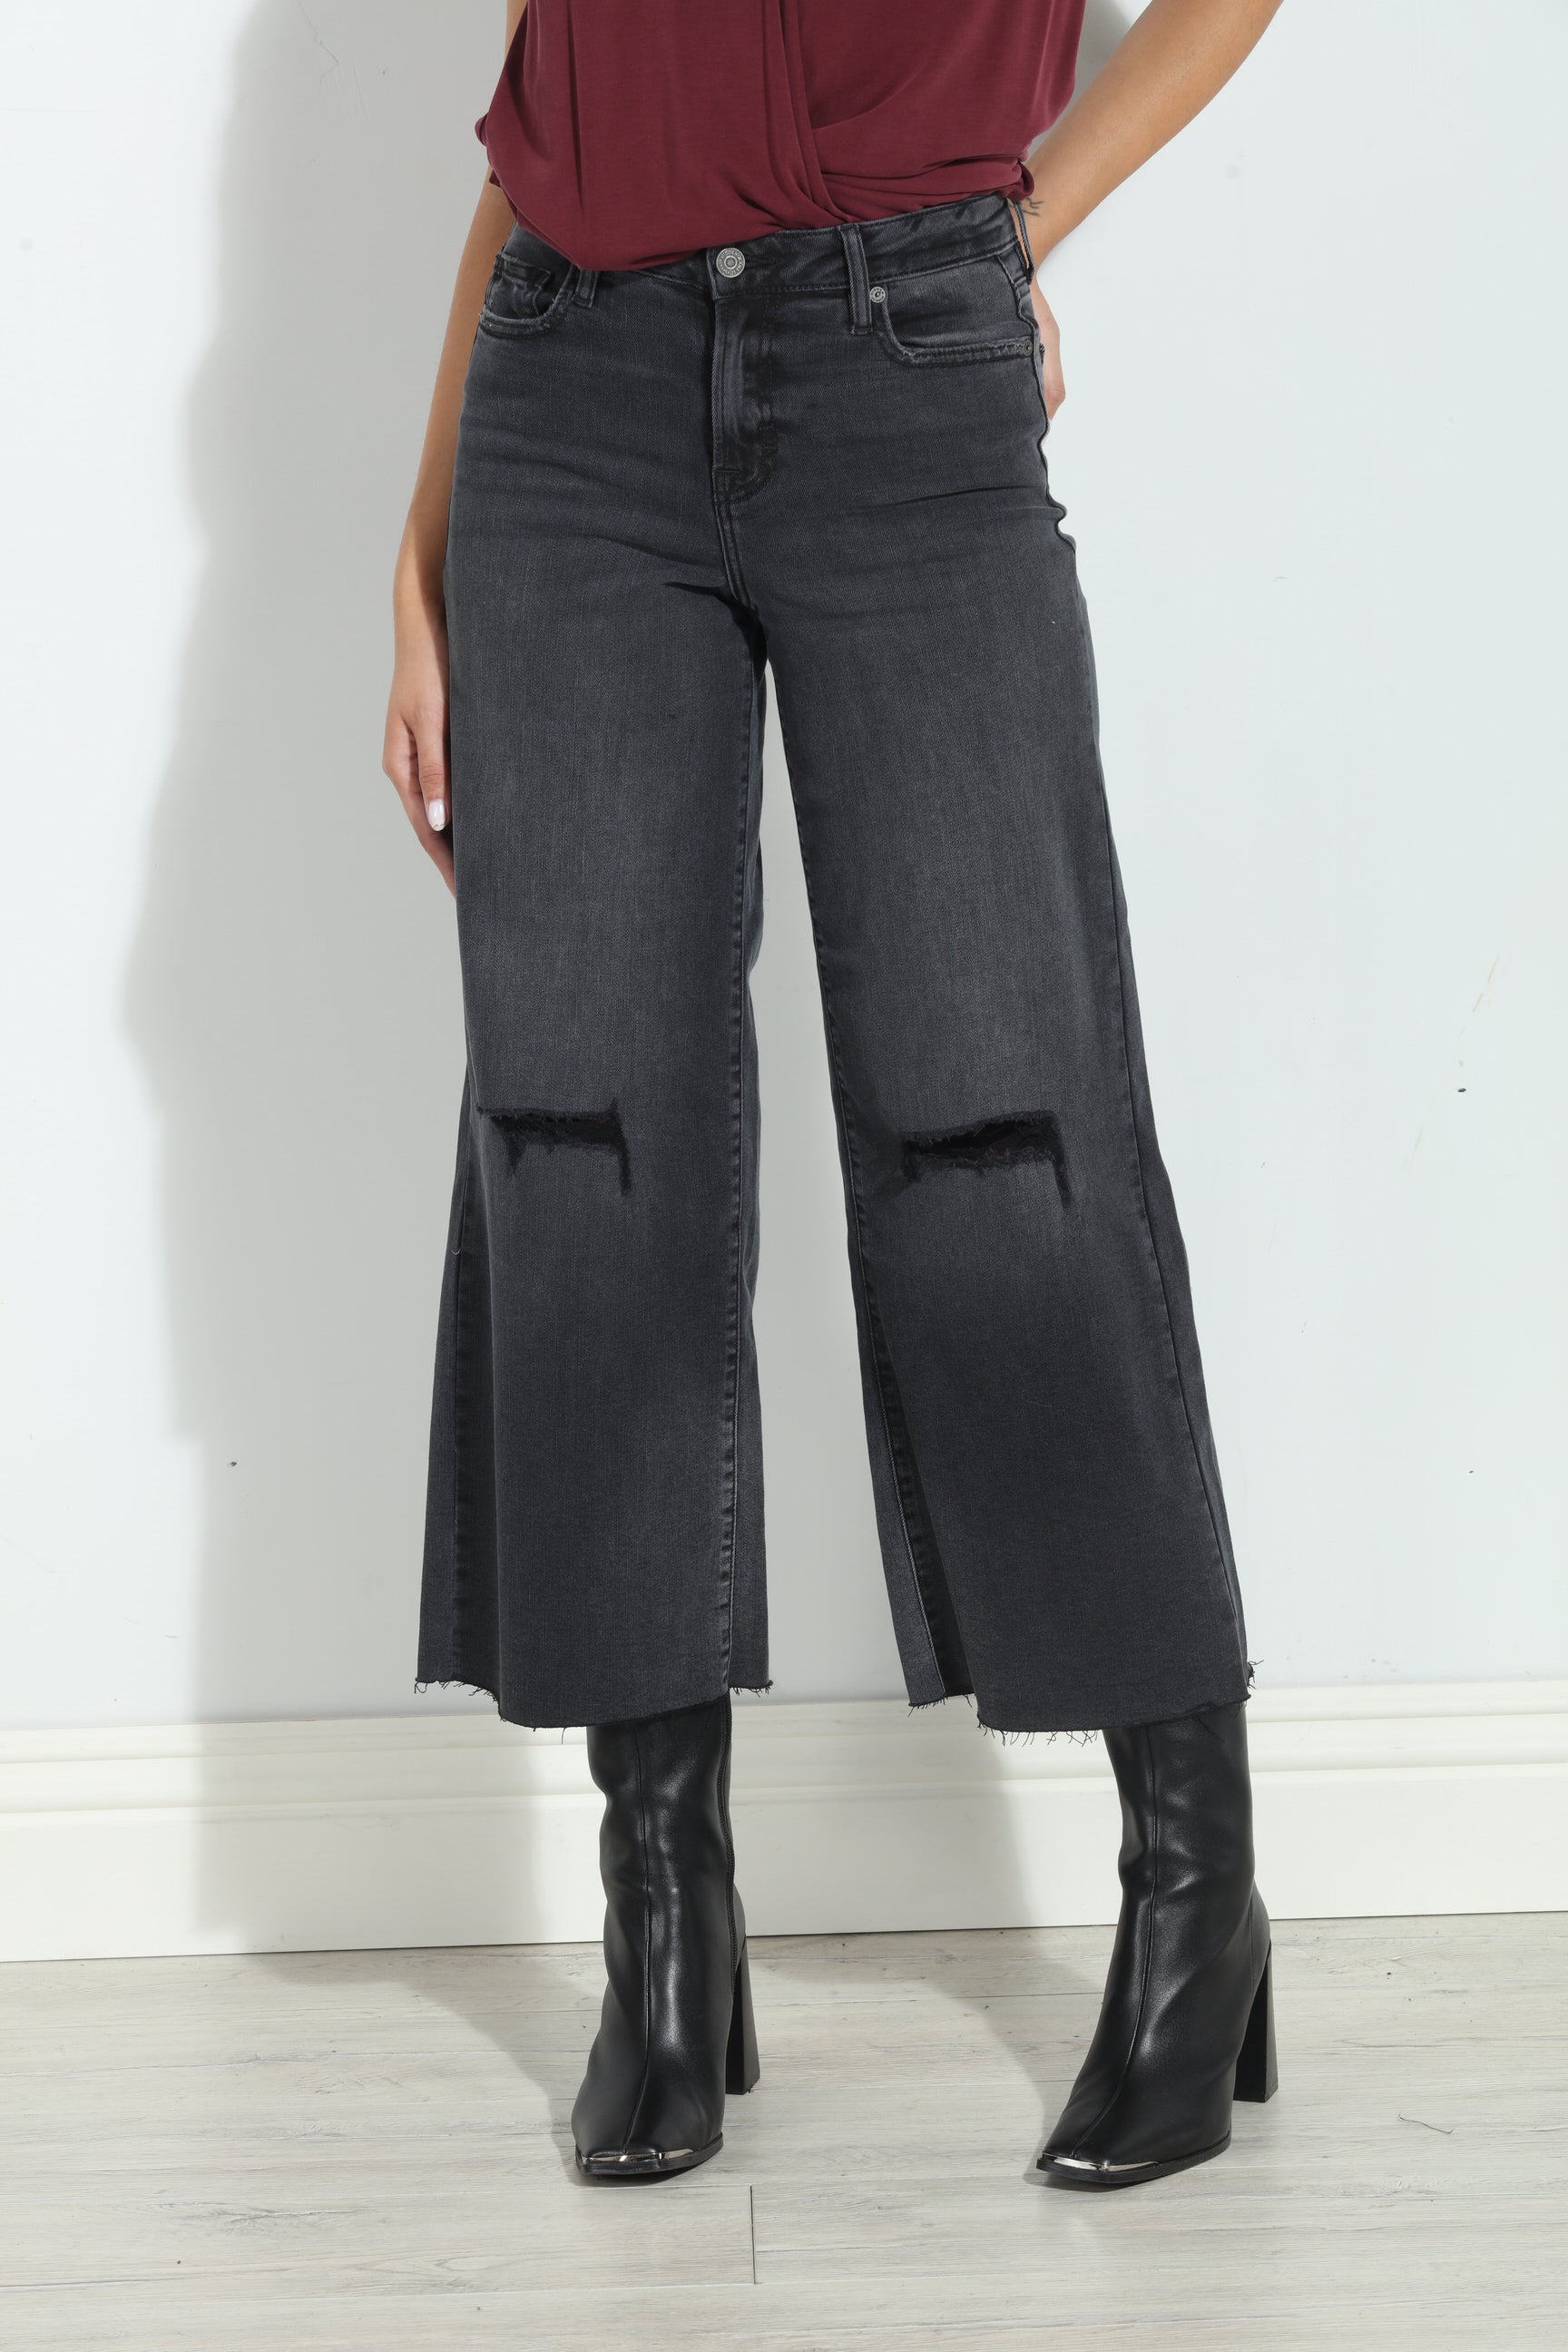 Hidden Jeans Nori Cropped Wide Leg- Charcoal